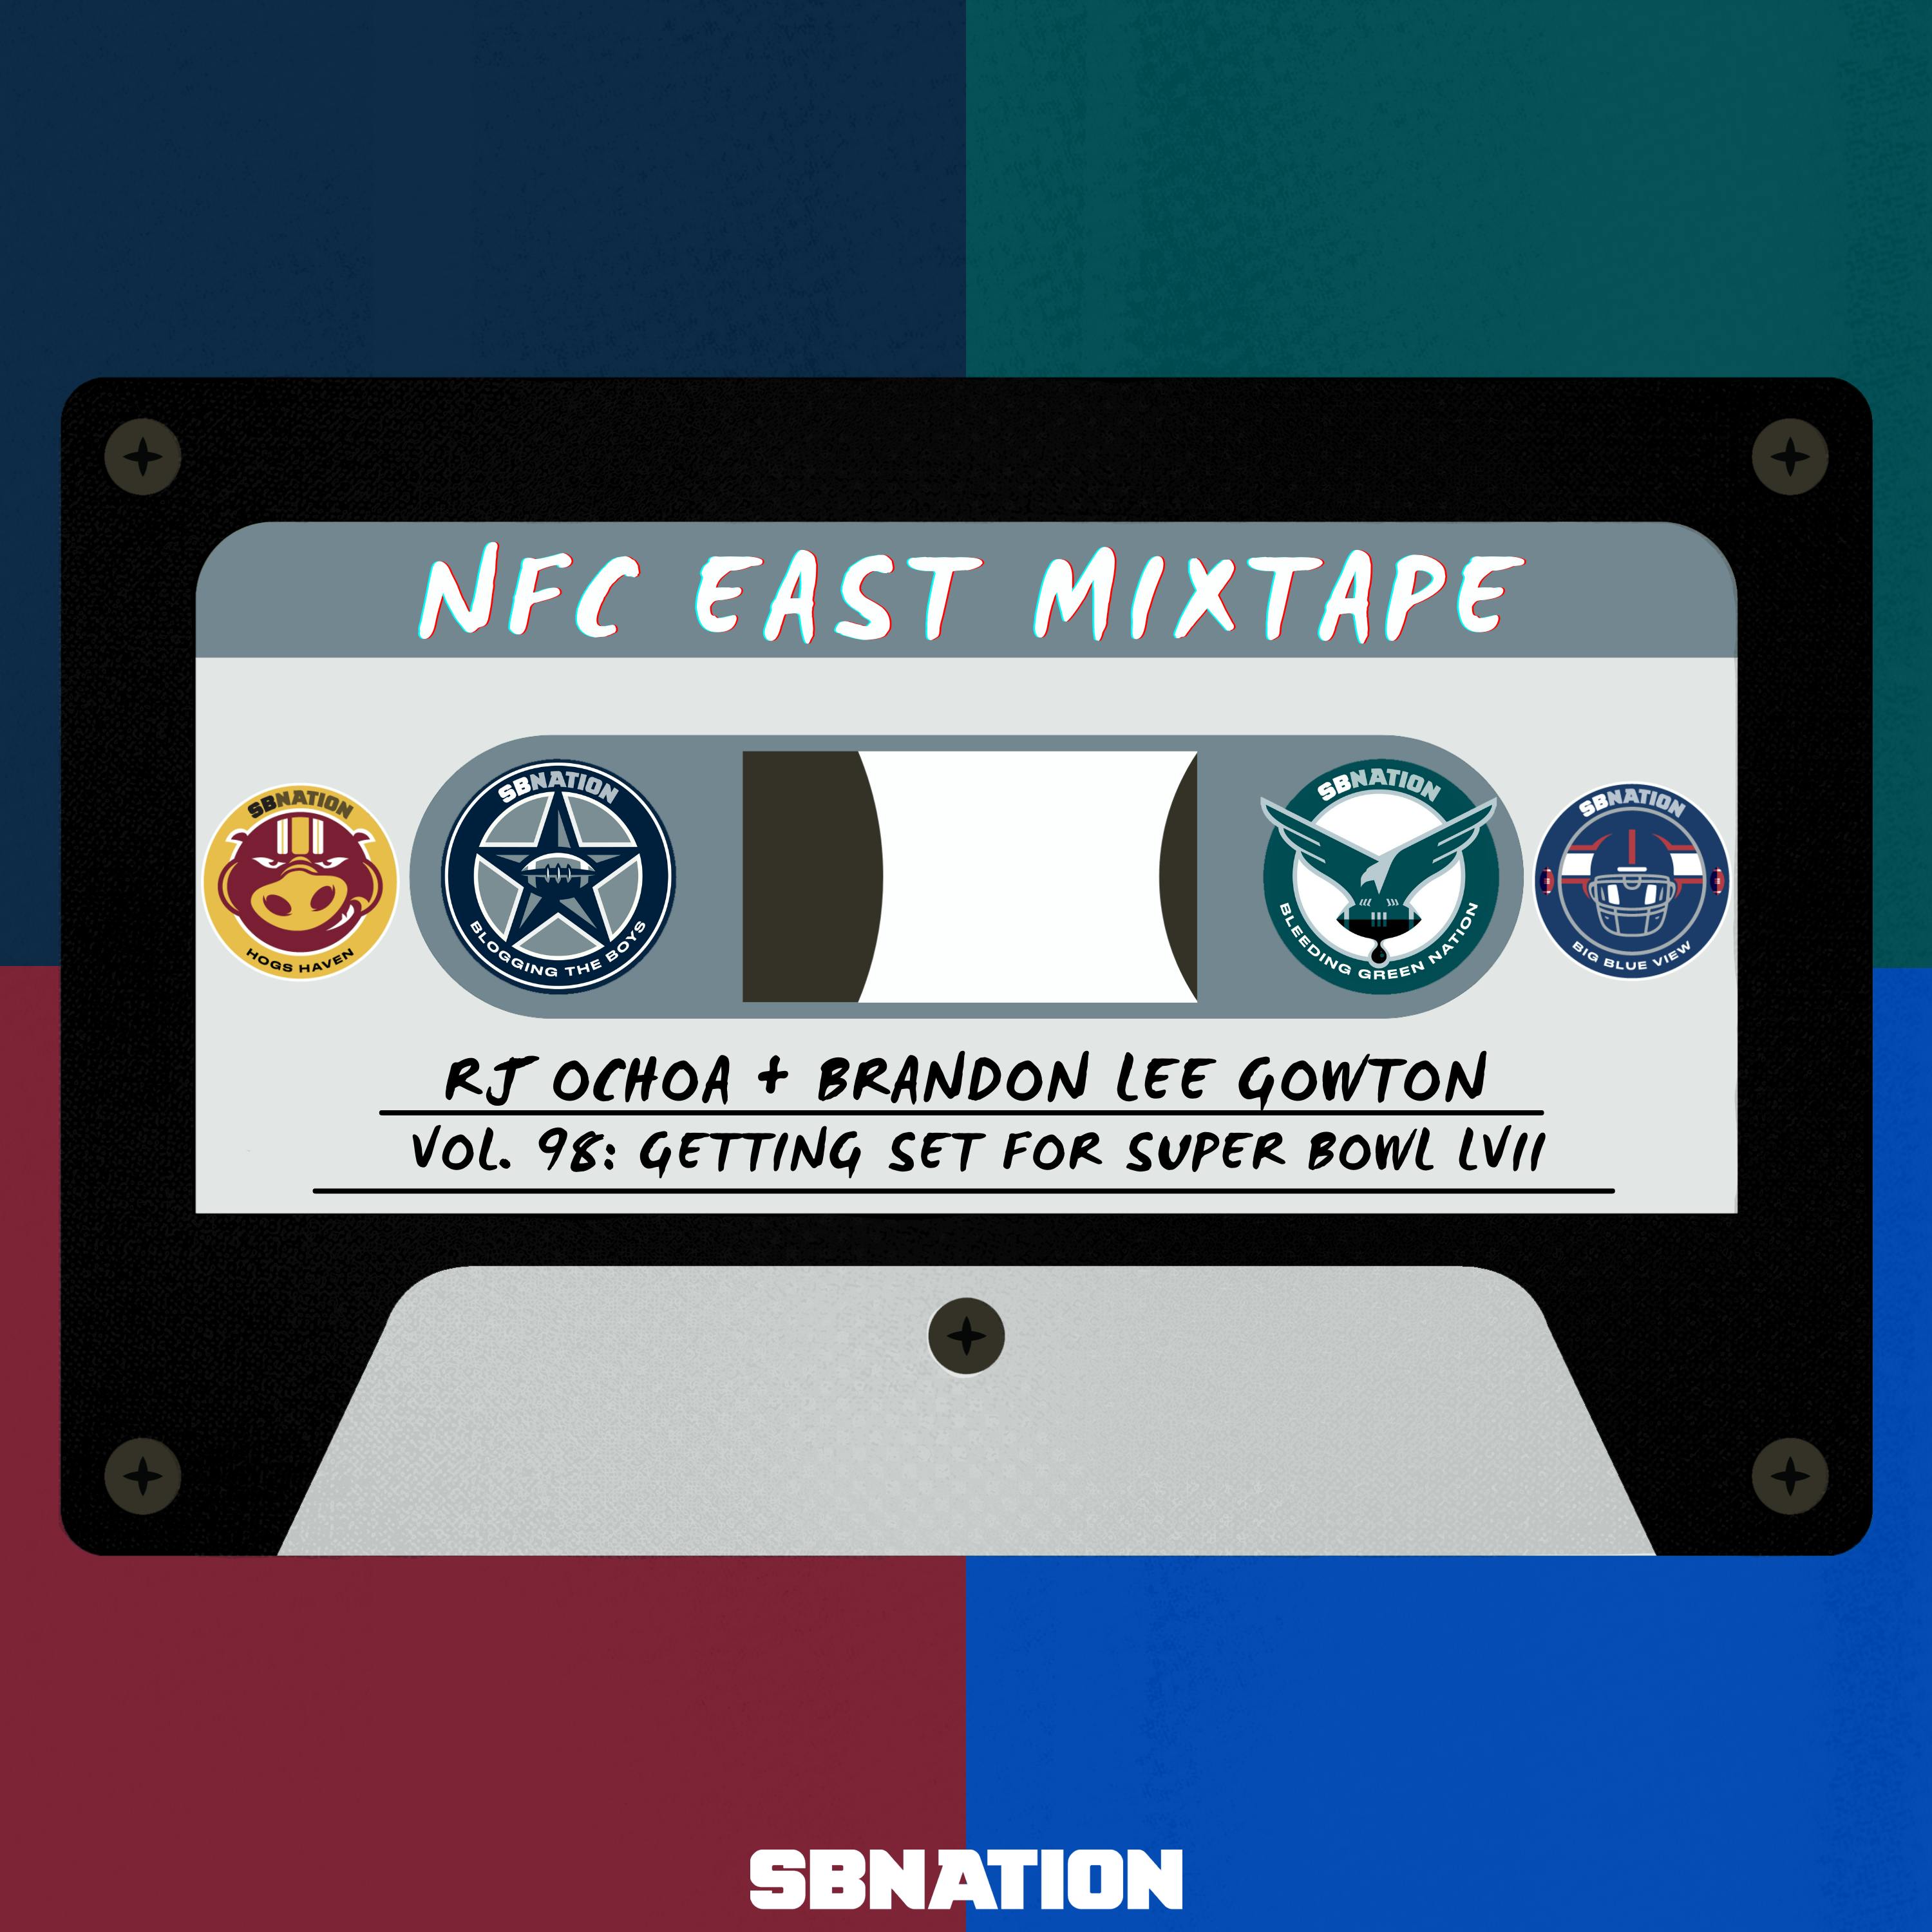 NFC East Mixtape Vol. 98: Getting set for Super Bowl LVII